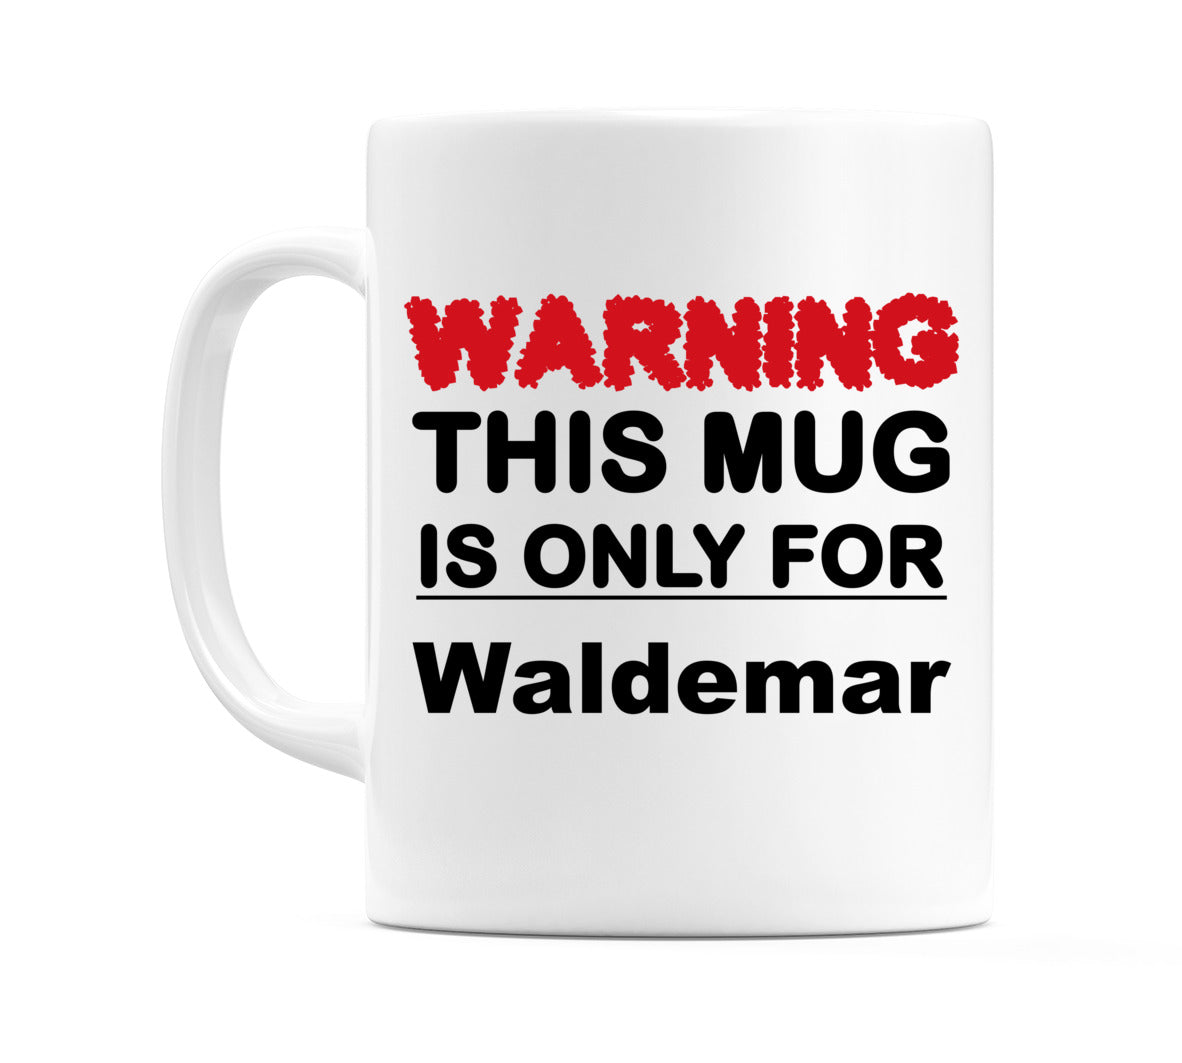 Warning This Mug is ONLY for Waldemar Mug